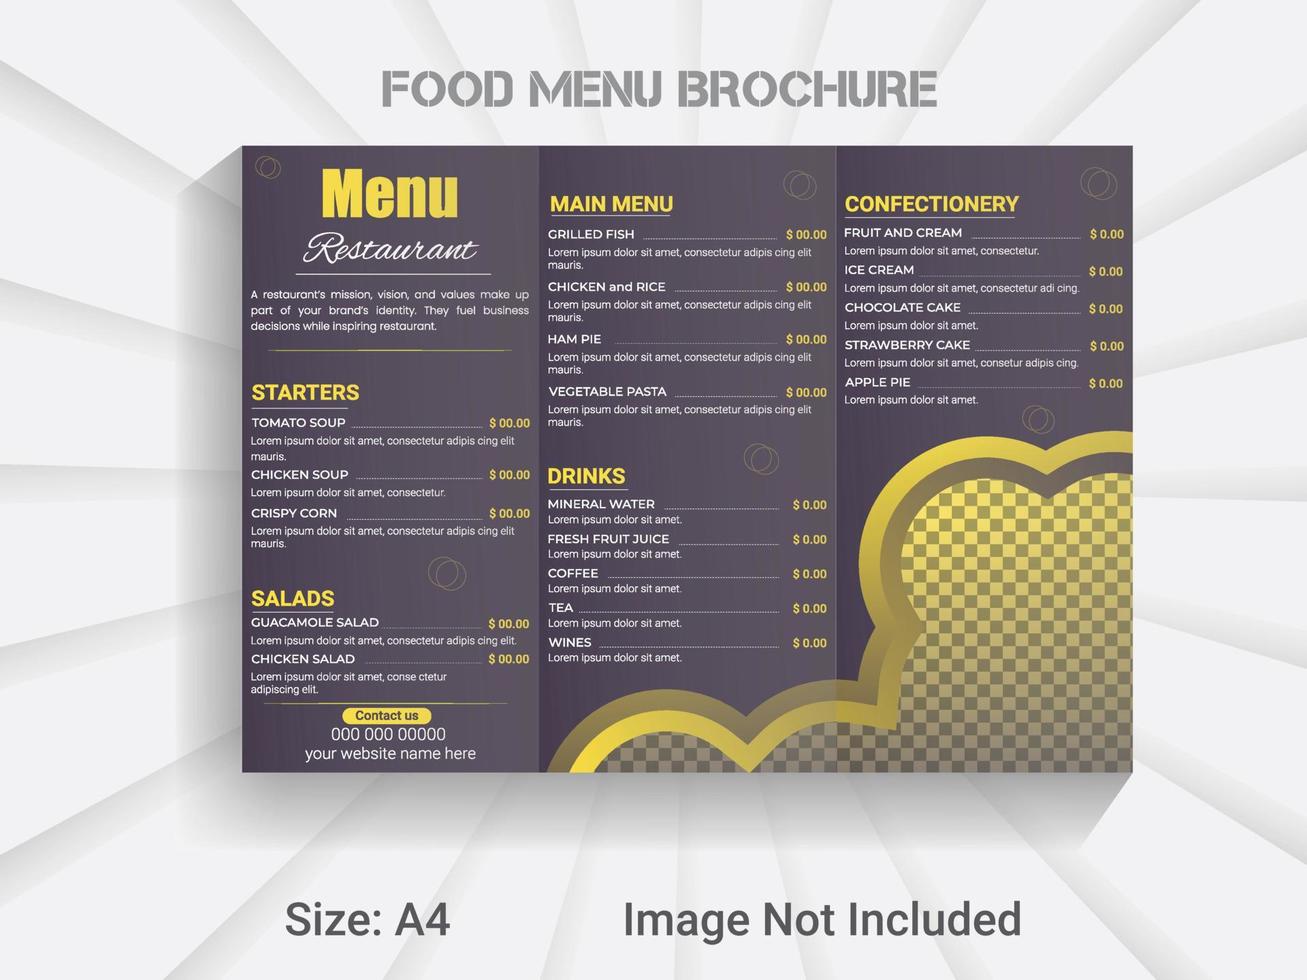 tríptico folleto nuevo año comida menú modelo. moderno vector restaurante menú diseño disposición.